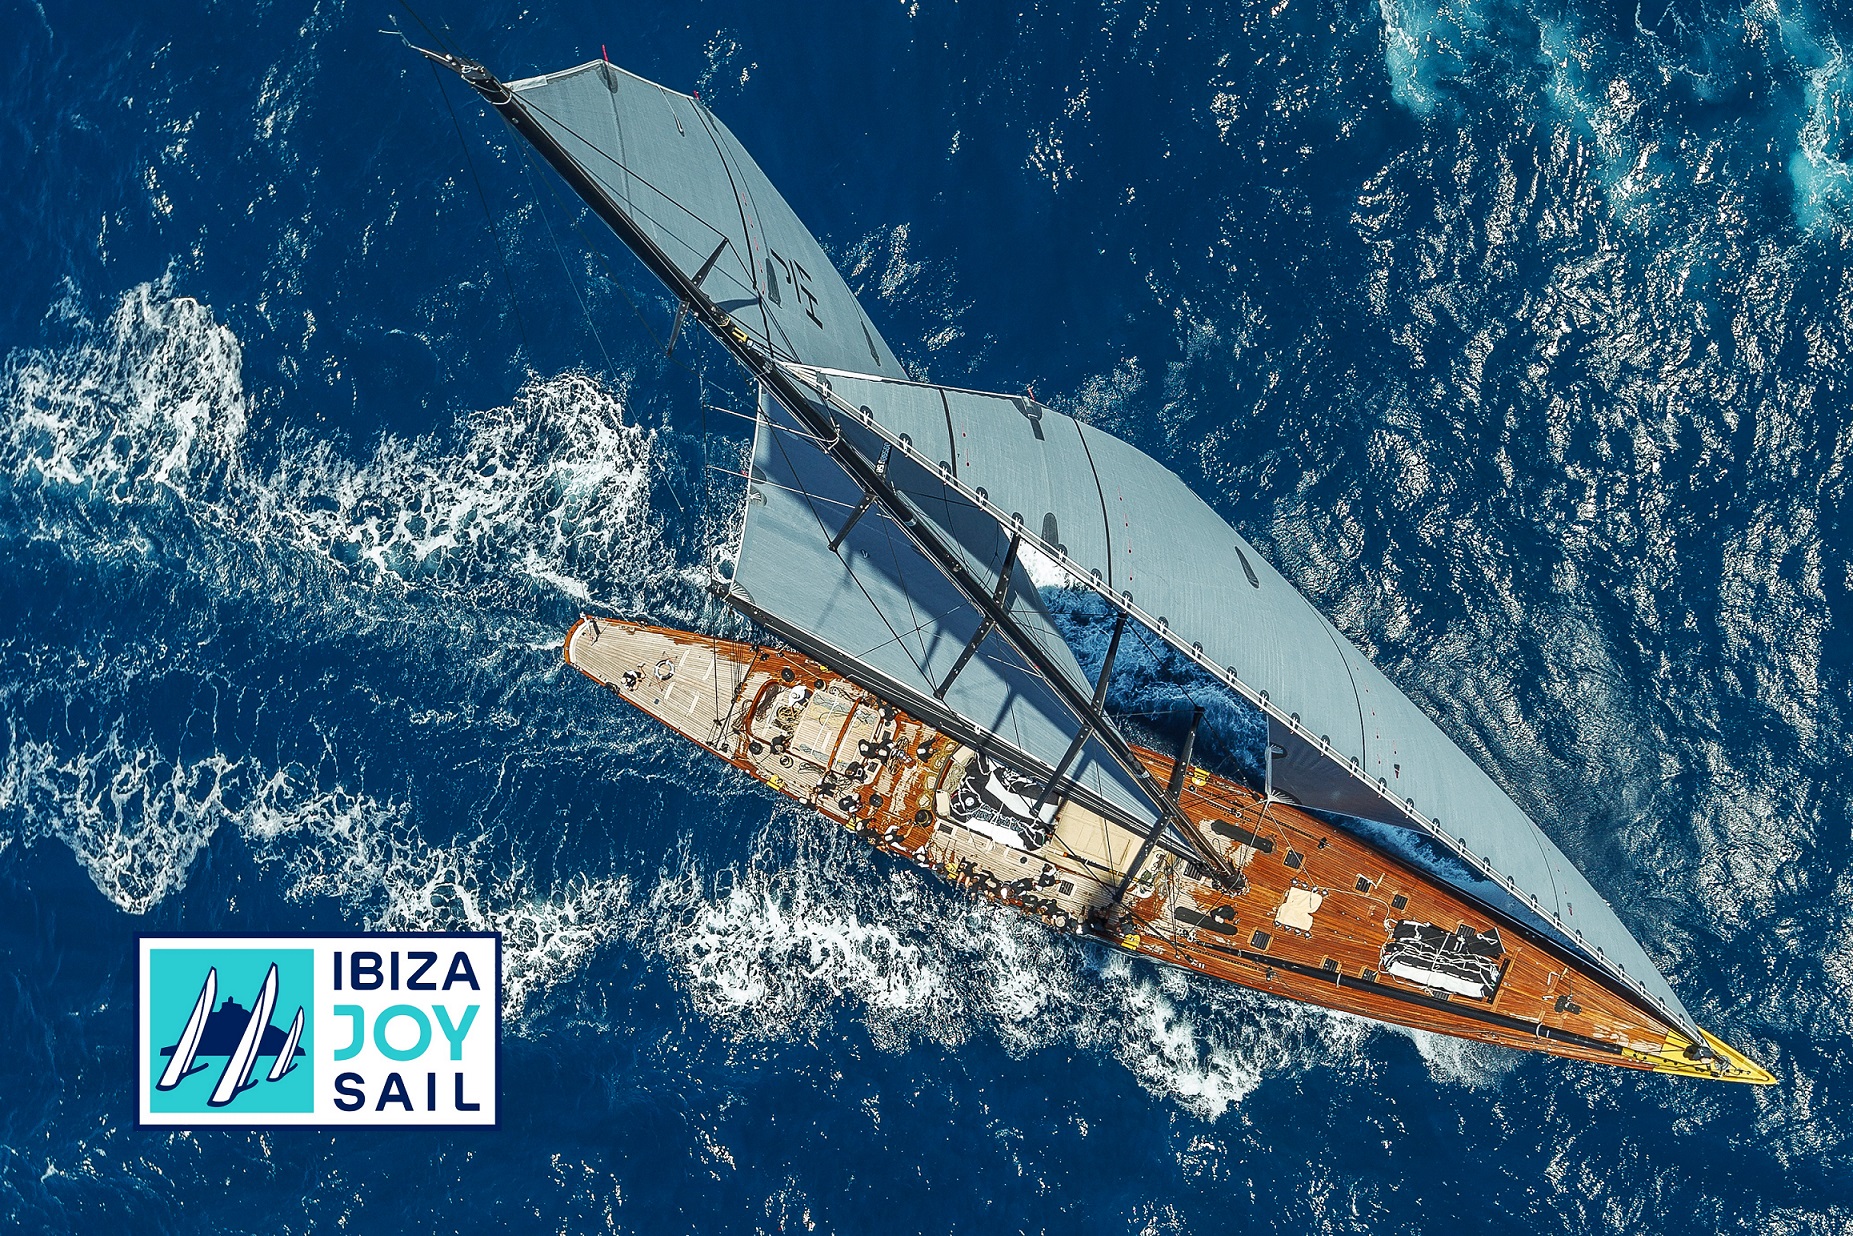 a-new-regatta-for-big-yachts-is-born.-ibiza-joy-sail,17th-to20th-june2021